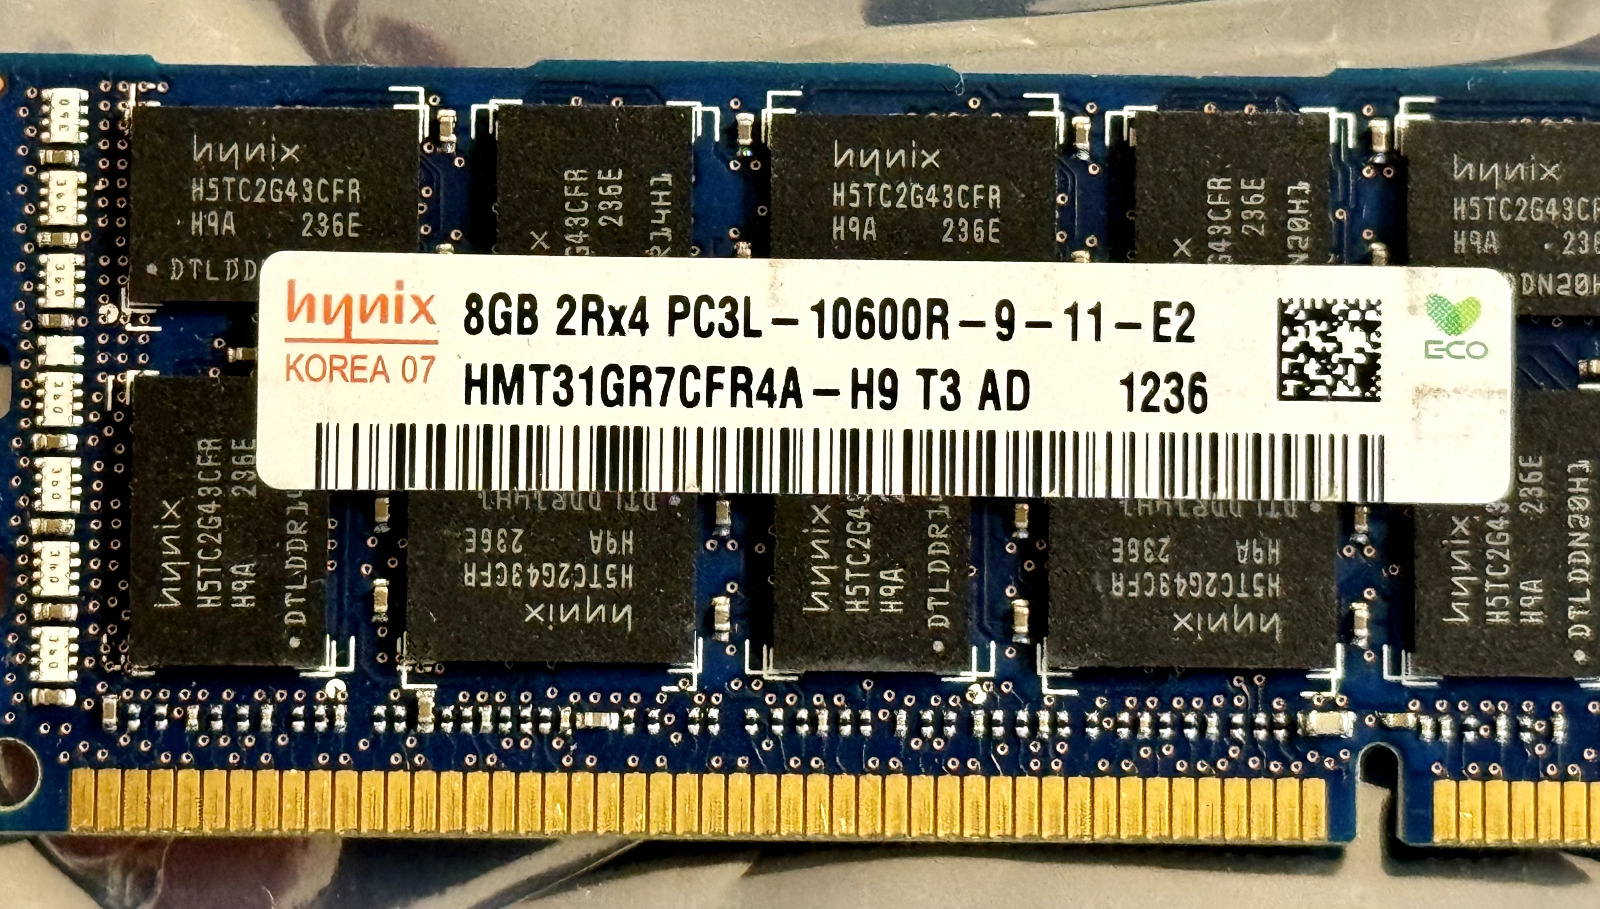 SK Hynix 8GB 2Rx4 PC3L-10600R Registered Memory HMT31GR7CFR4A-H9